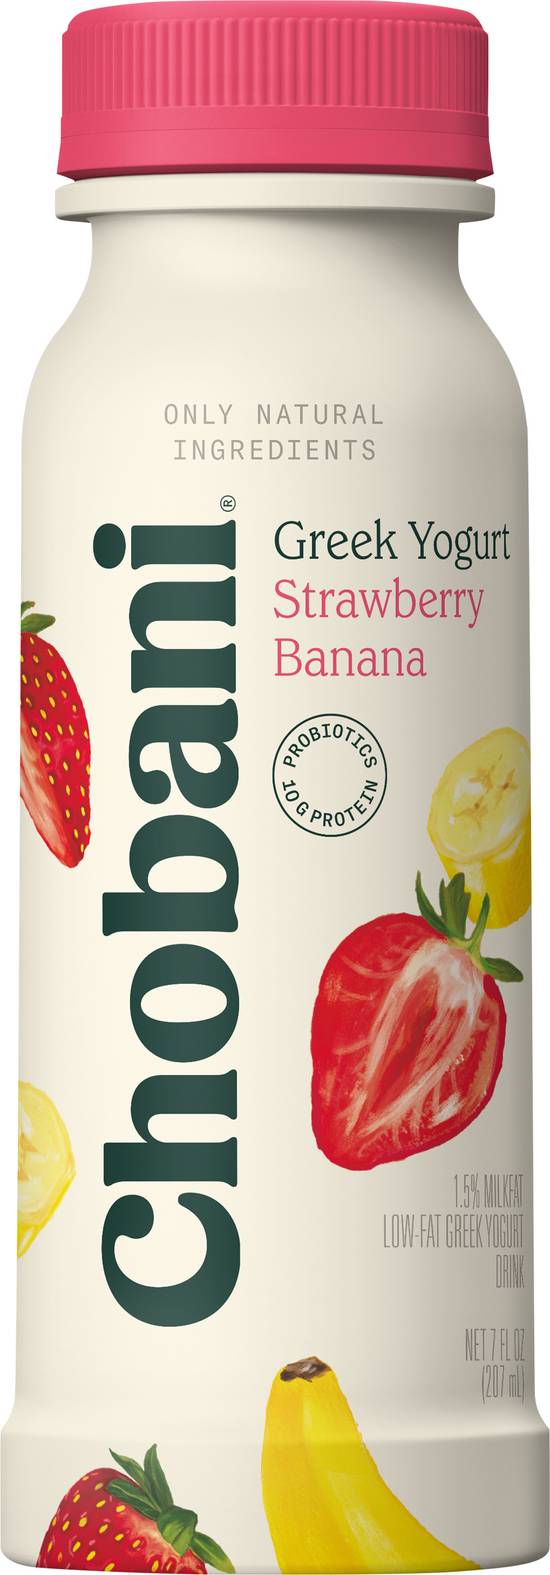 Chobani Strawberry Banana Greek Yogurt Drink